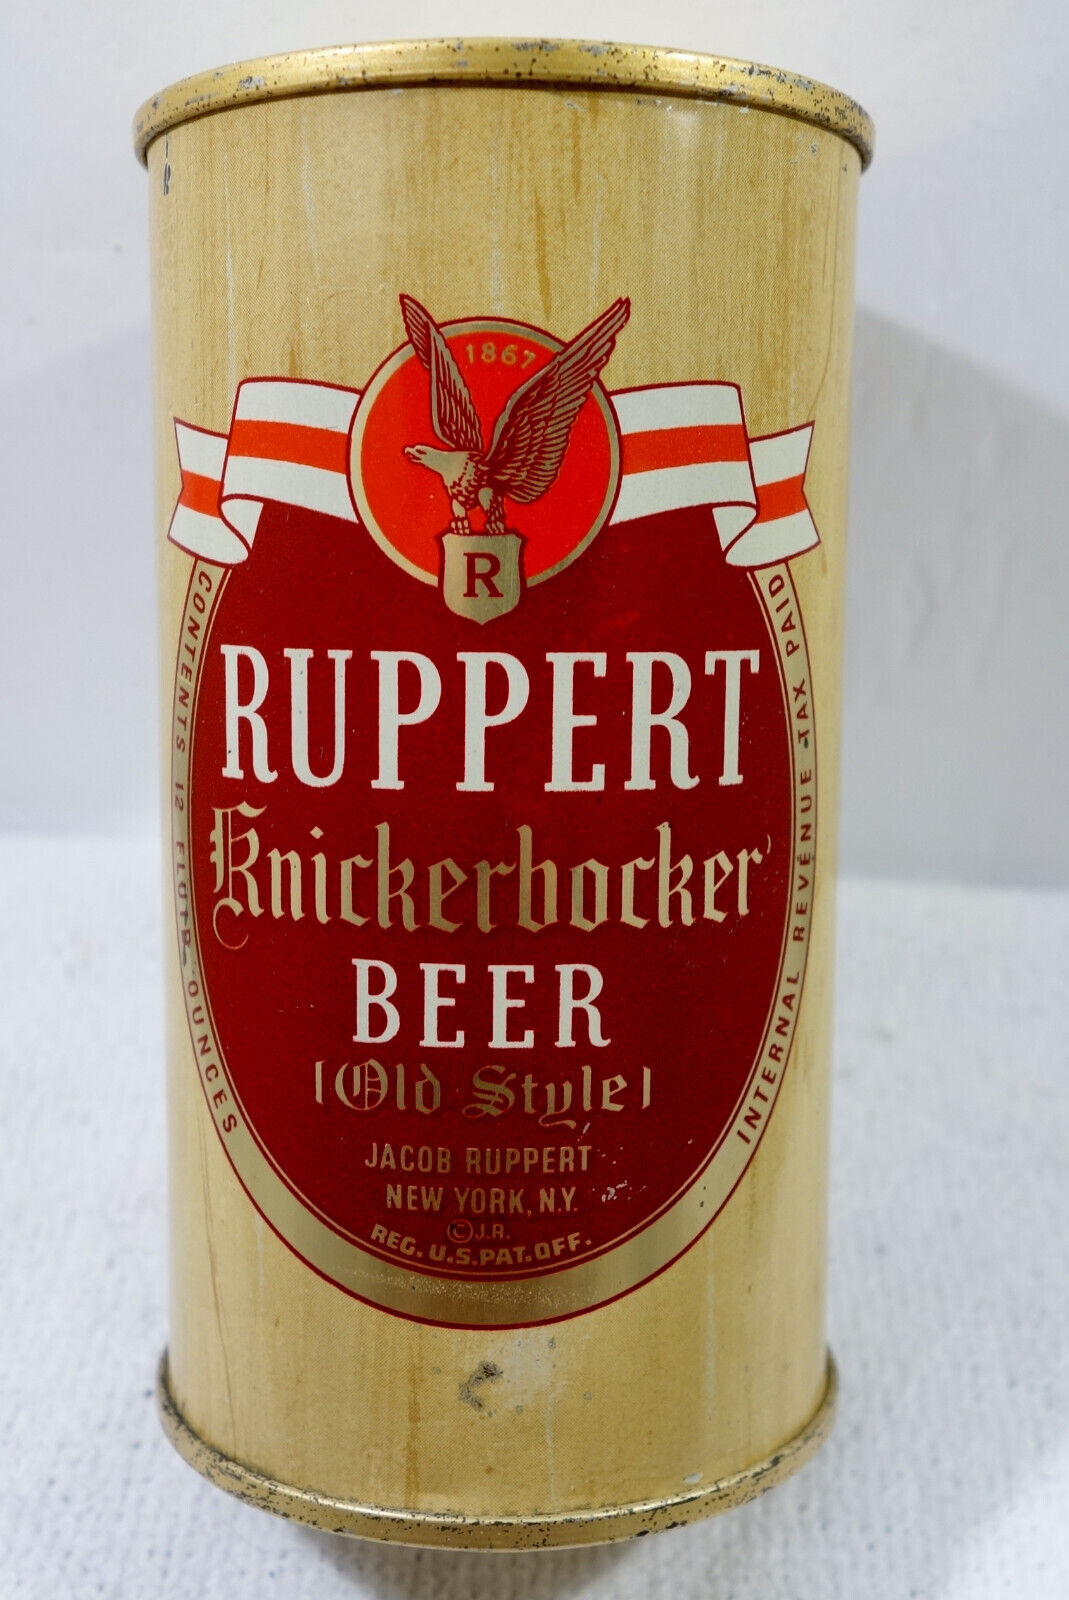 Ruppert Knickerbocker Reg. U.S Pat. Off. Flat Top Beer Can Bottom Opened